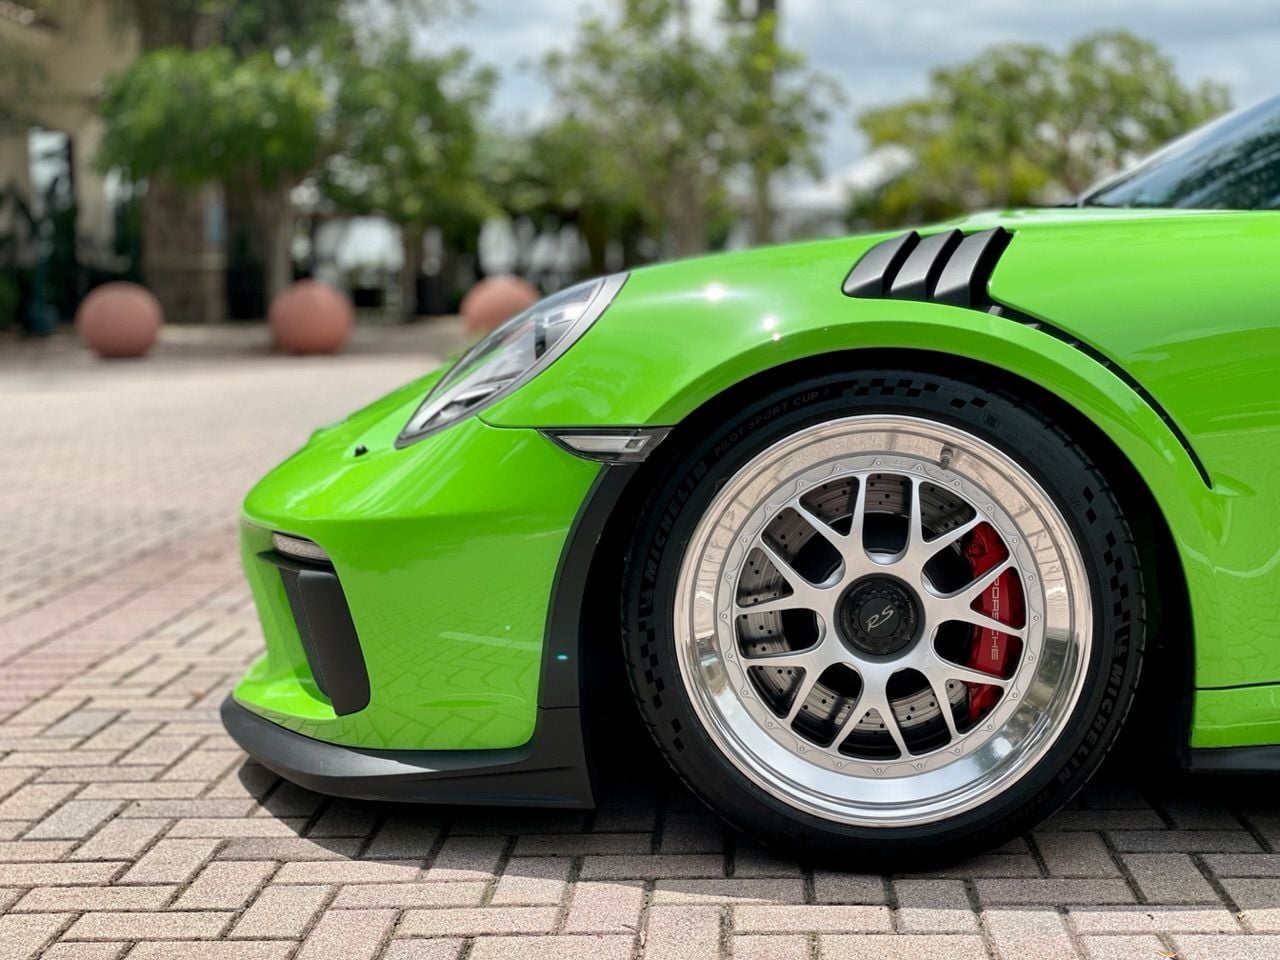 2019 Porsche GT3 - 2019 Lizard GT3 RS, CPO, 5957 Miles - Used - VIN WP0AF2A92KS165213 - 5,957 Miles - 6 cyl - 2WD - Parkland, FL 33076, United States